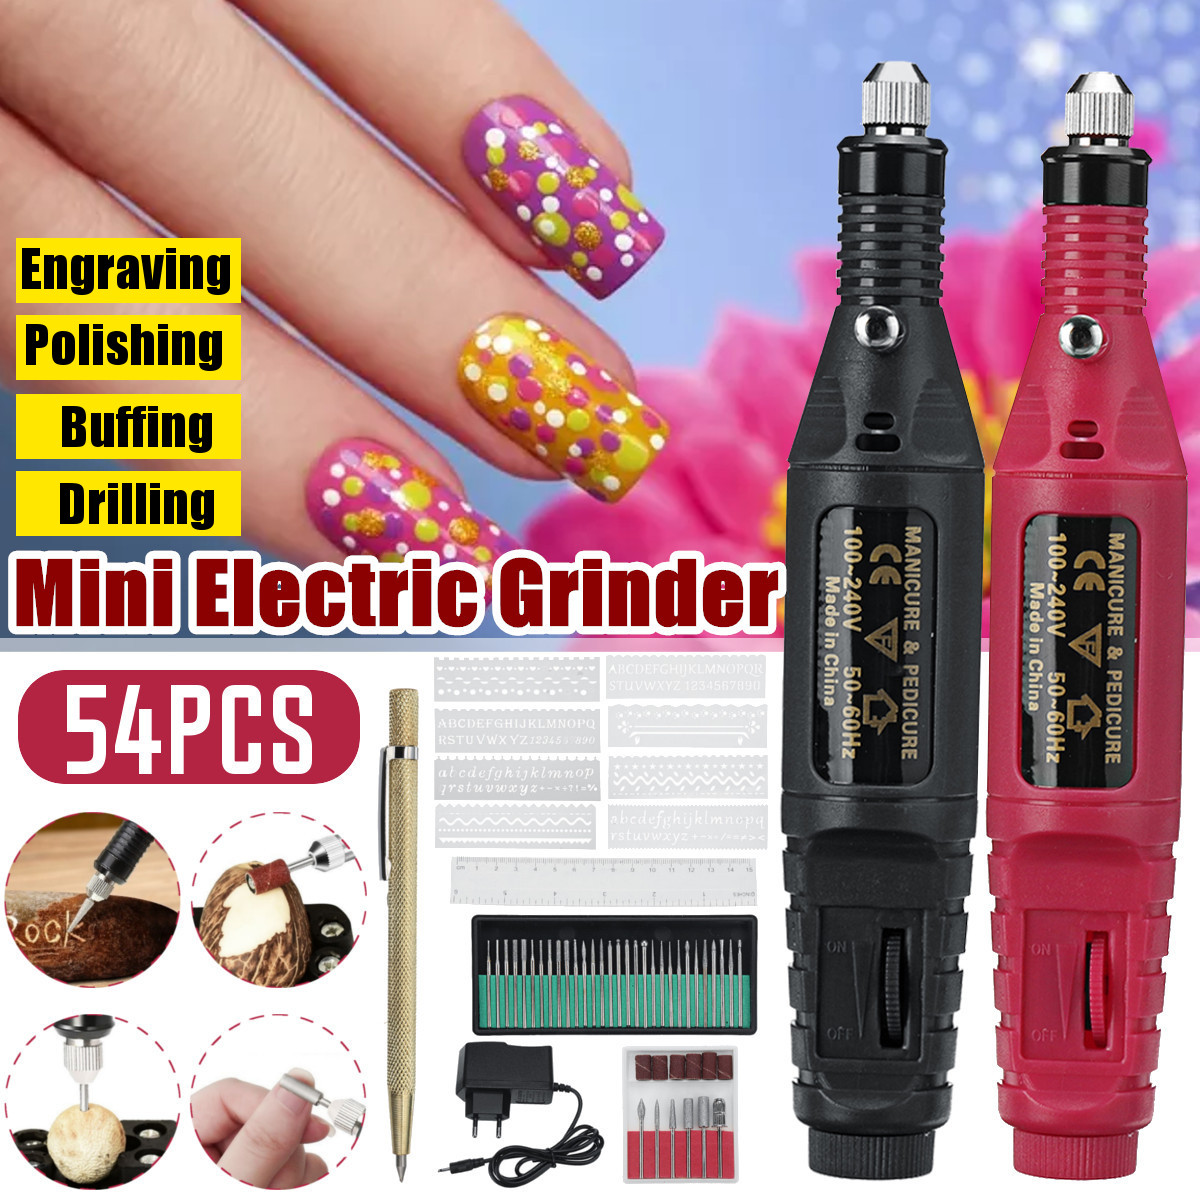 12V-54Pcs-Electric-Engraving-Pen-Kit-Regulated-Speed-Mini-DIY-Etching-Drilling-Polishing-Pen-For-Jew-1684916-1